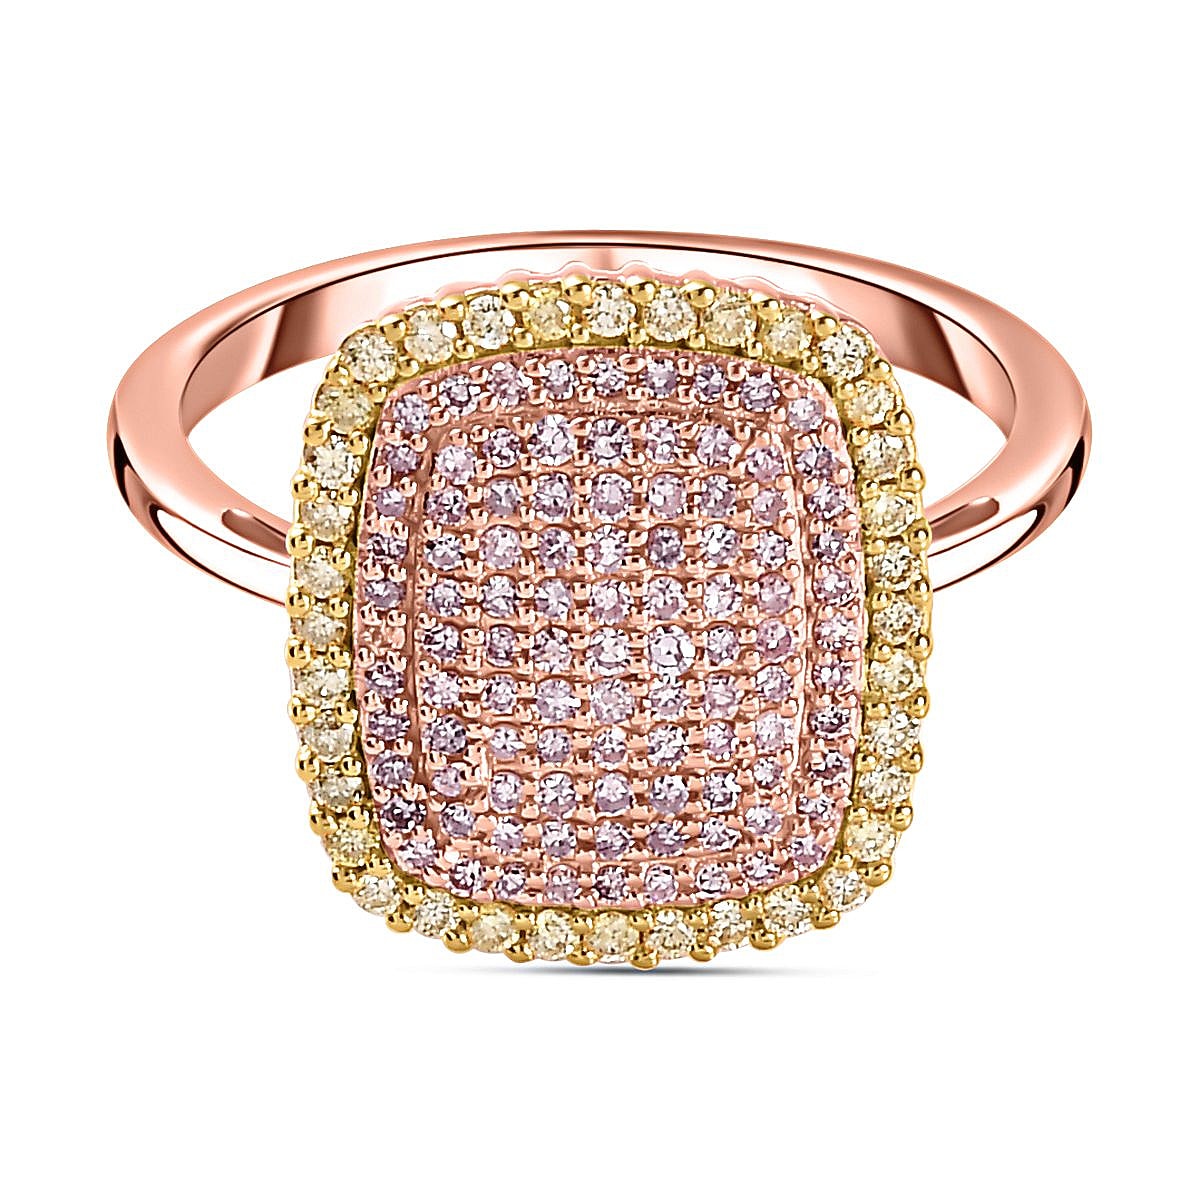 Steves Find - 9K Rose Gold SGL Certified Pink Diamond & Natural Yellow Diamond Ring 0.51 Ct.